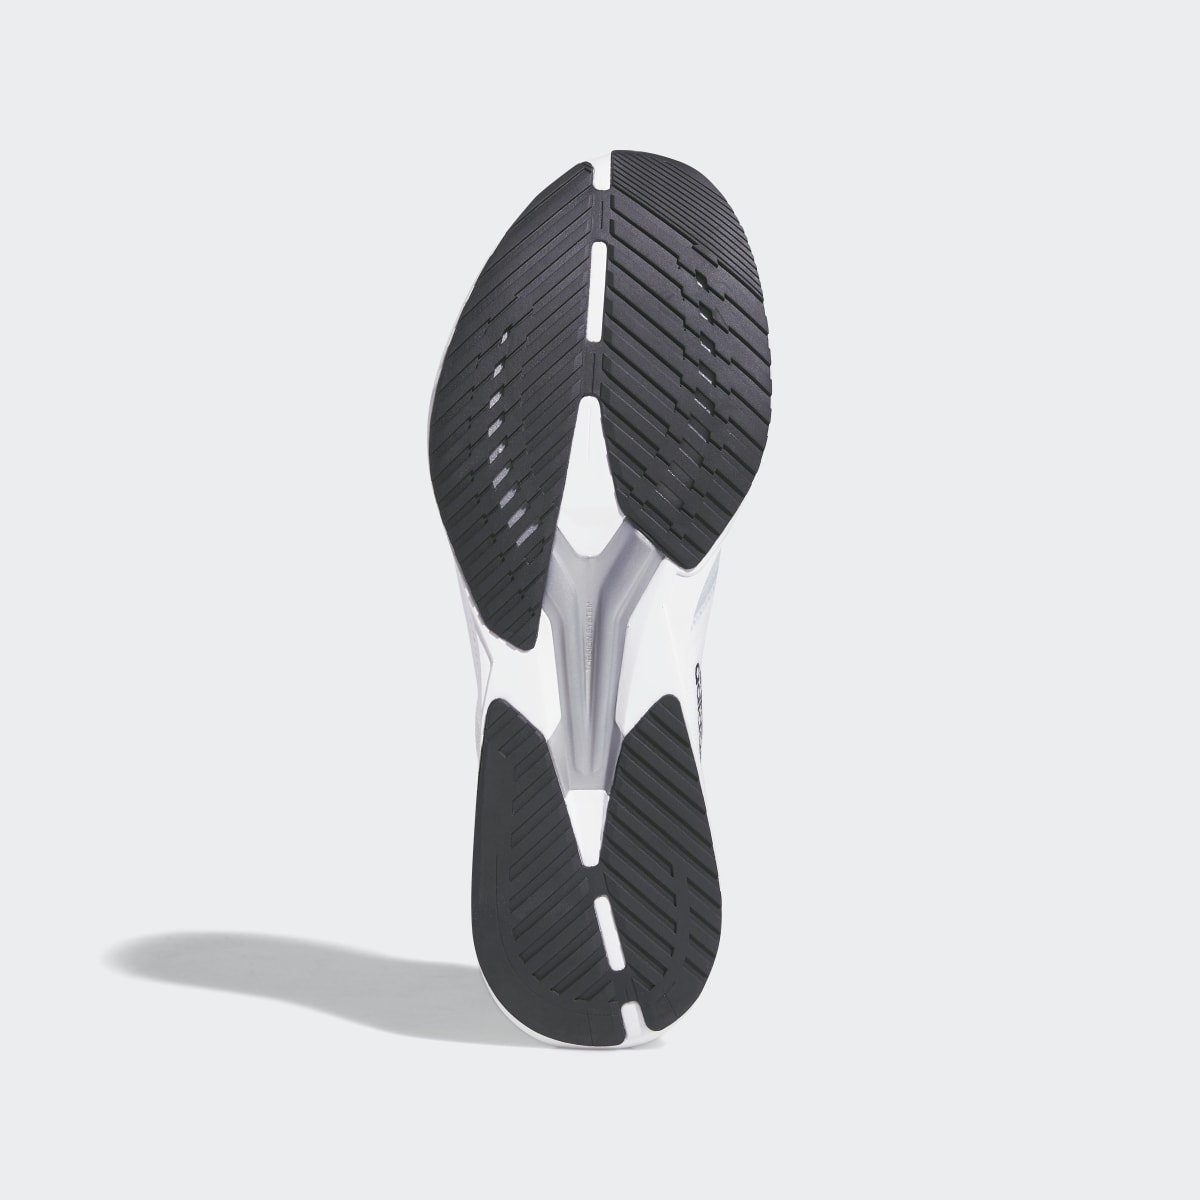 Adidas Adizero RC 4 Ayakkabı. 4